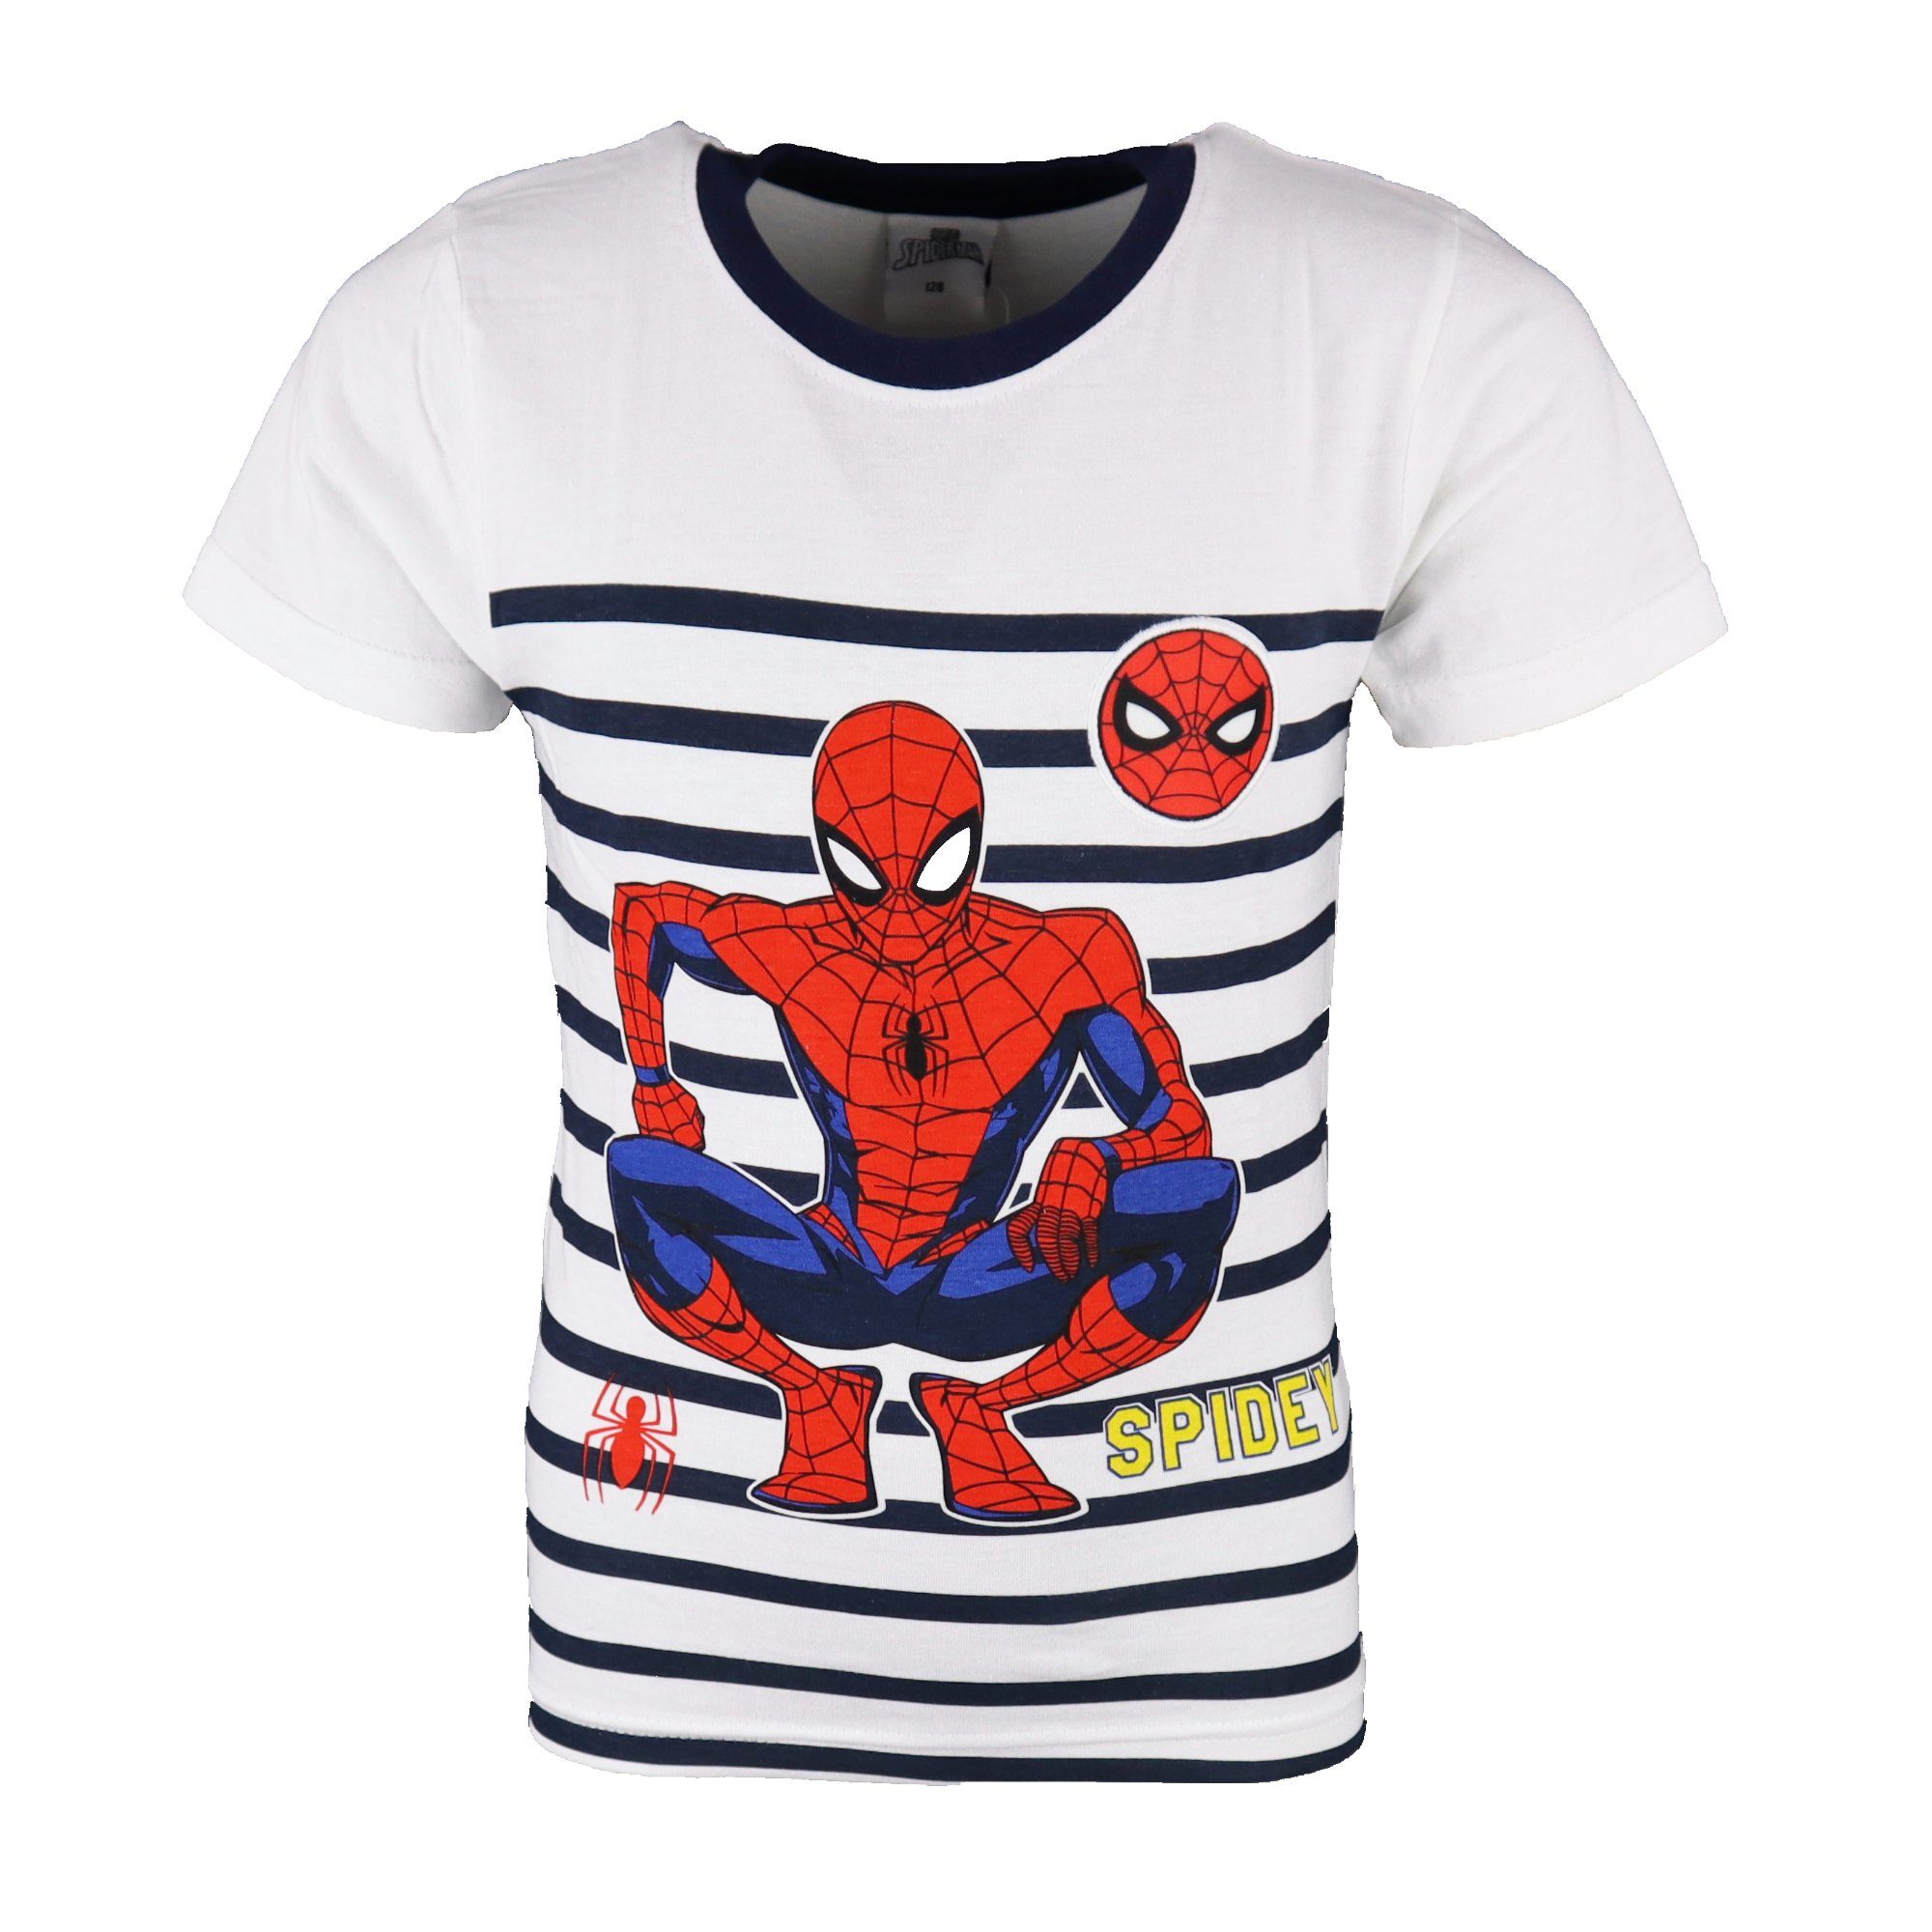 MARVEL Print-Shirt Marvel Spiderman Kinder Jungen T-Shirt Gr. 104 bis 134,  100% Baumwolle, Material: 100 % Baumwolle